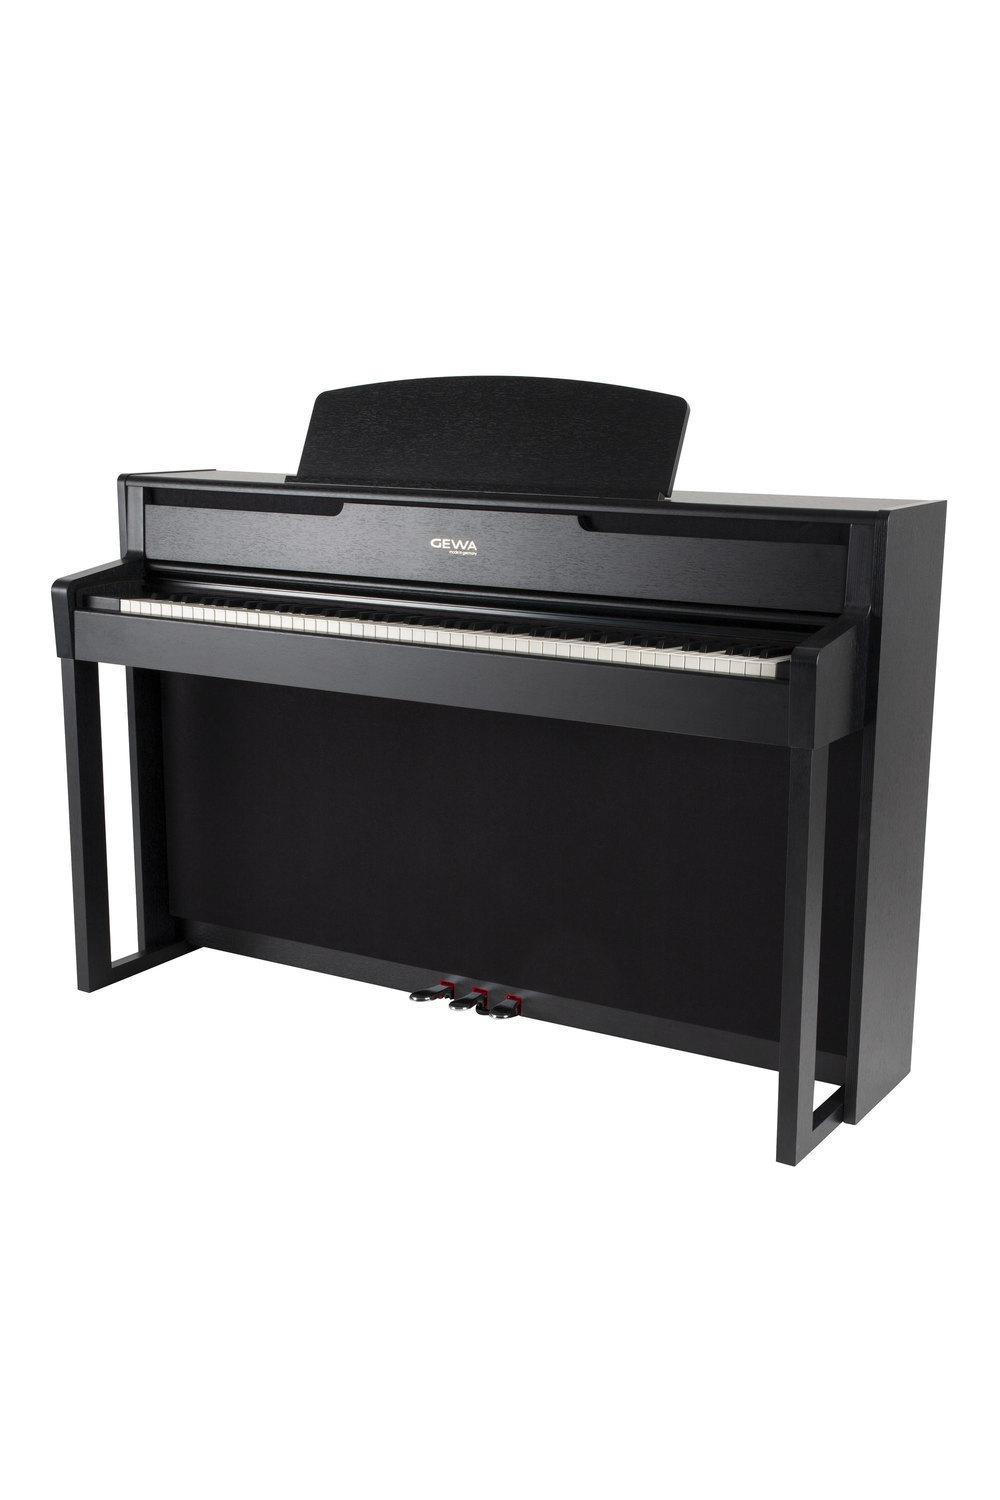 GEWA Digital Piano UP400 User Manual